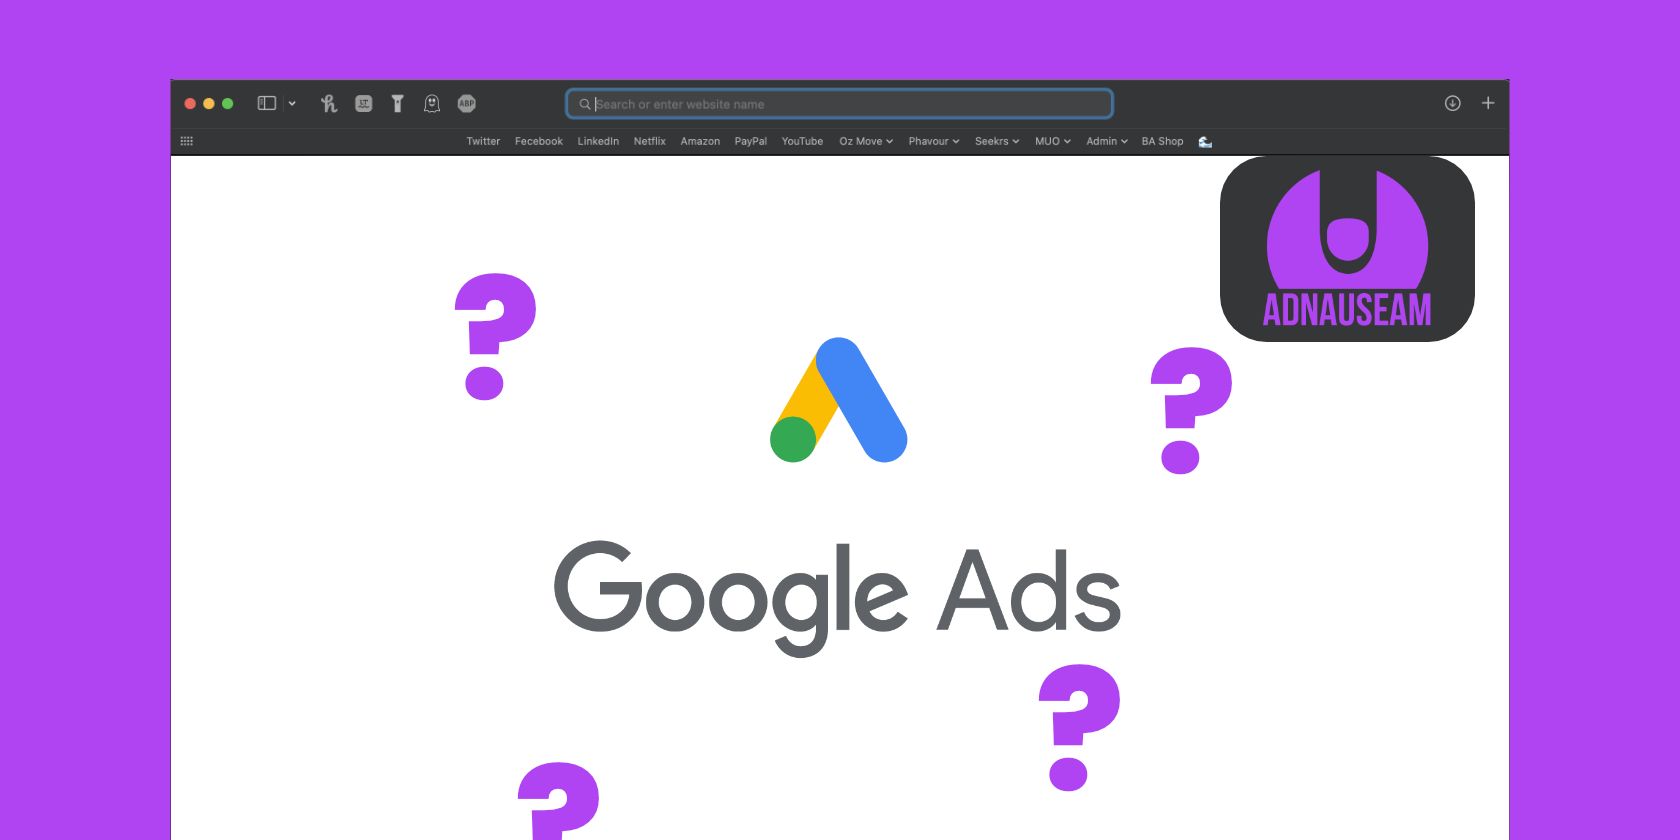 Google Ads on a browser using AdNauseam.